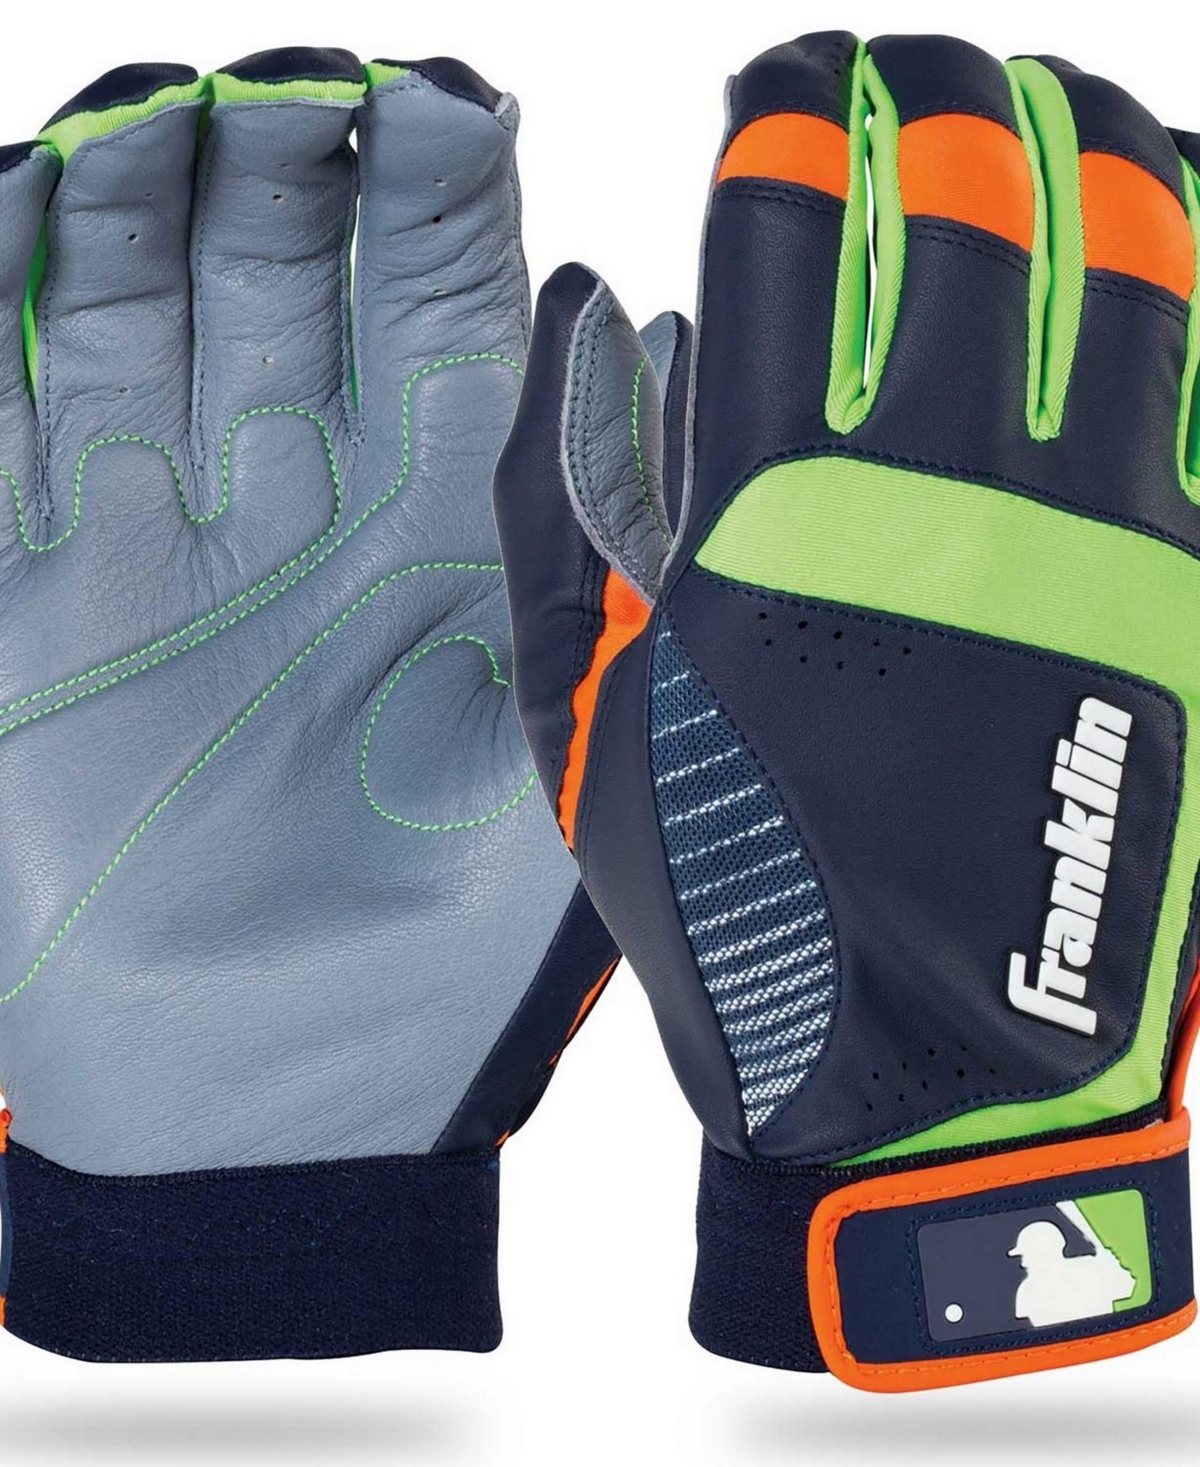 Franklin Sports Shok-sorb Neo Batting Gloves In Gray,navy,lime